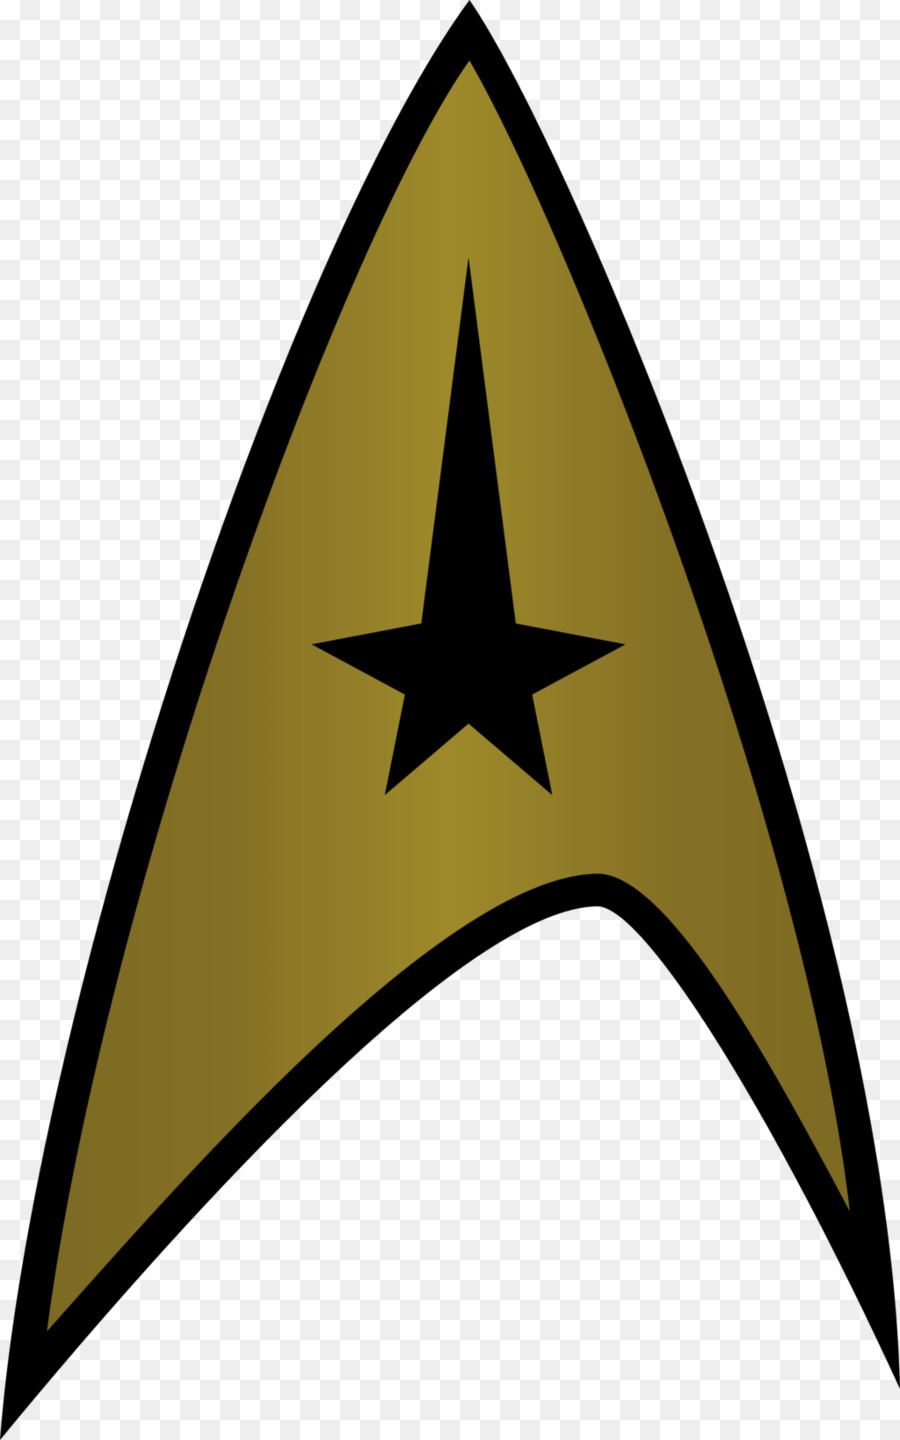 Star Trek Timelines Uhura USS Enterprise (NCC-1701) Starship Enterprise - star trek png download - 1024*1638 - Free Transparent Star Trek Timelines png Download.